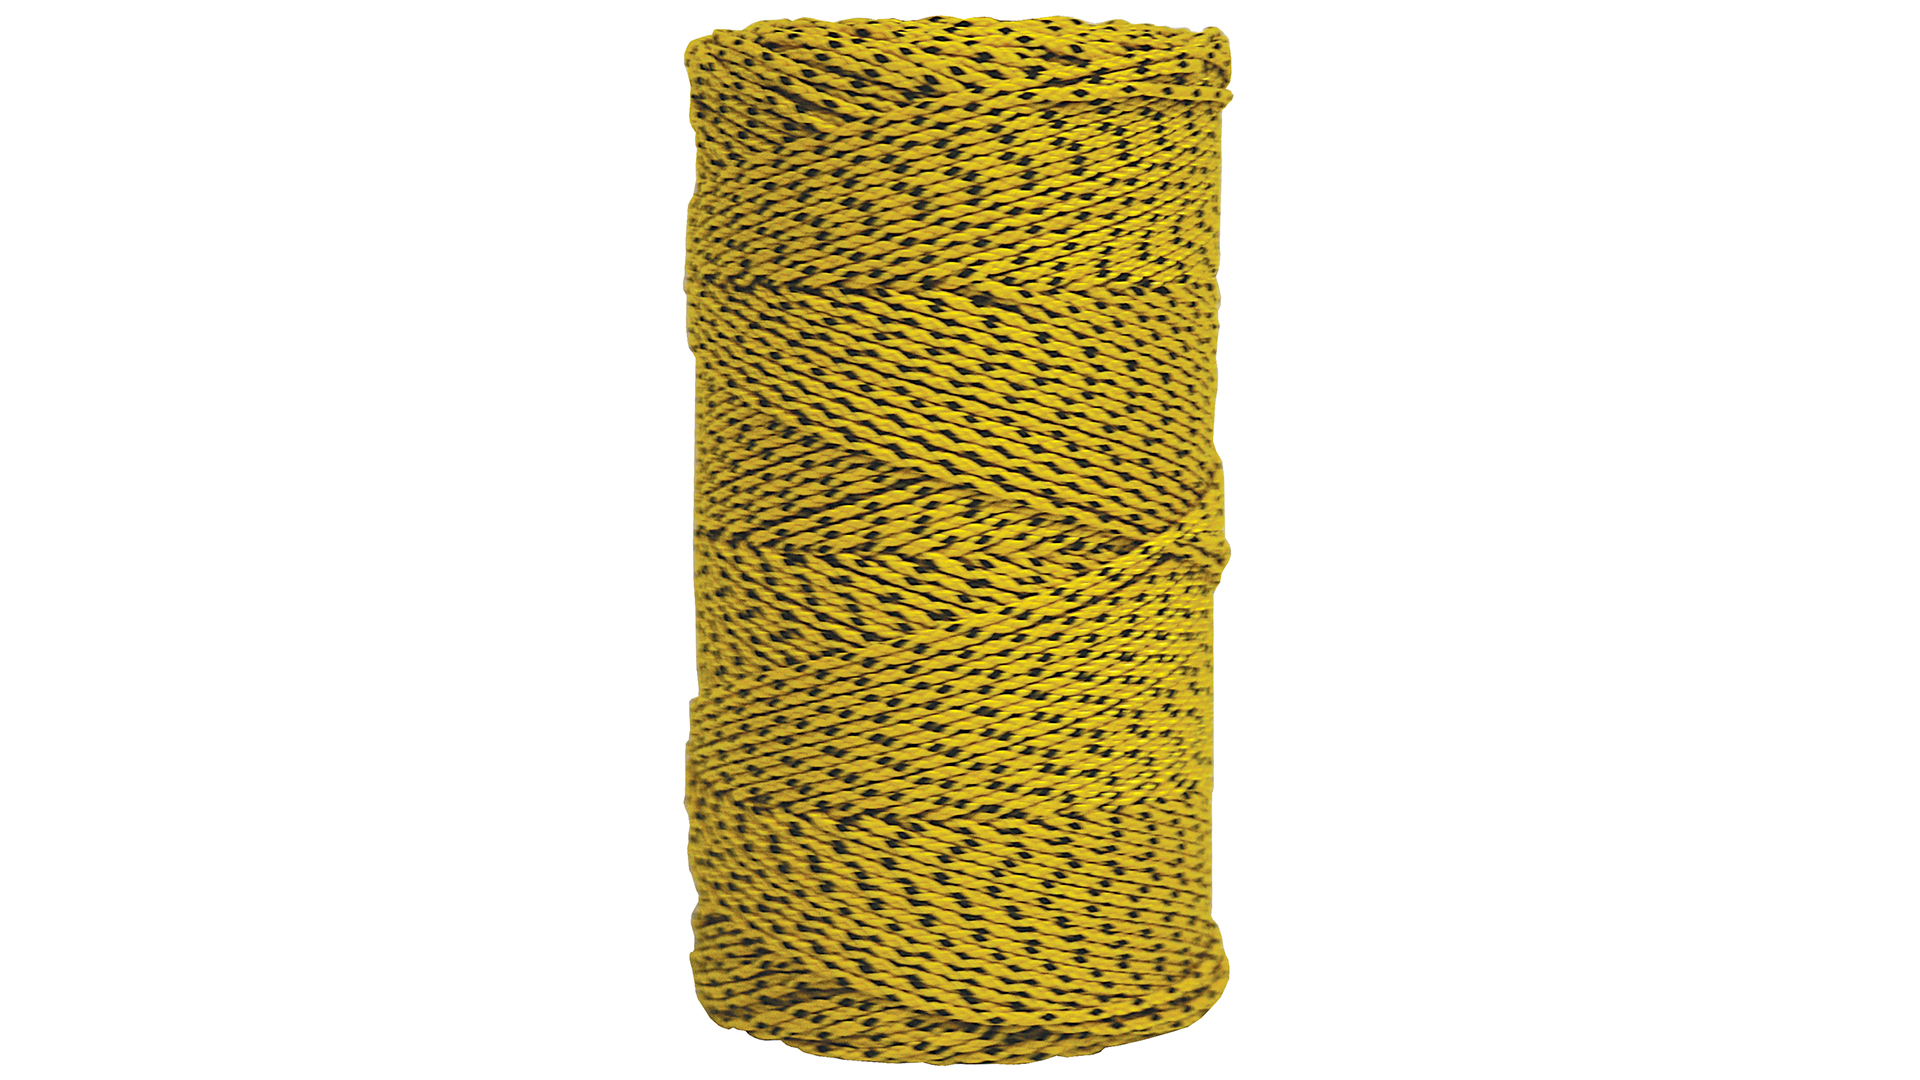 W. Rose™ Premium Bonded Braided Nylon Line (Yellow and Black)